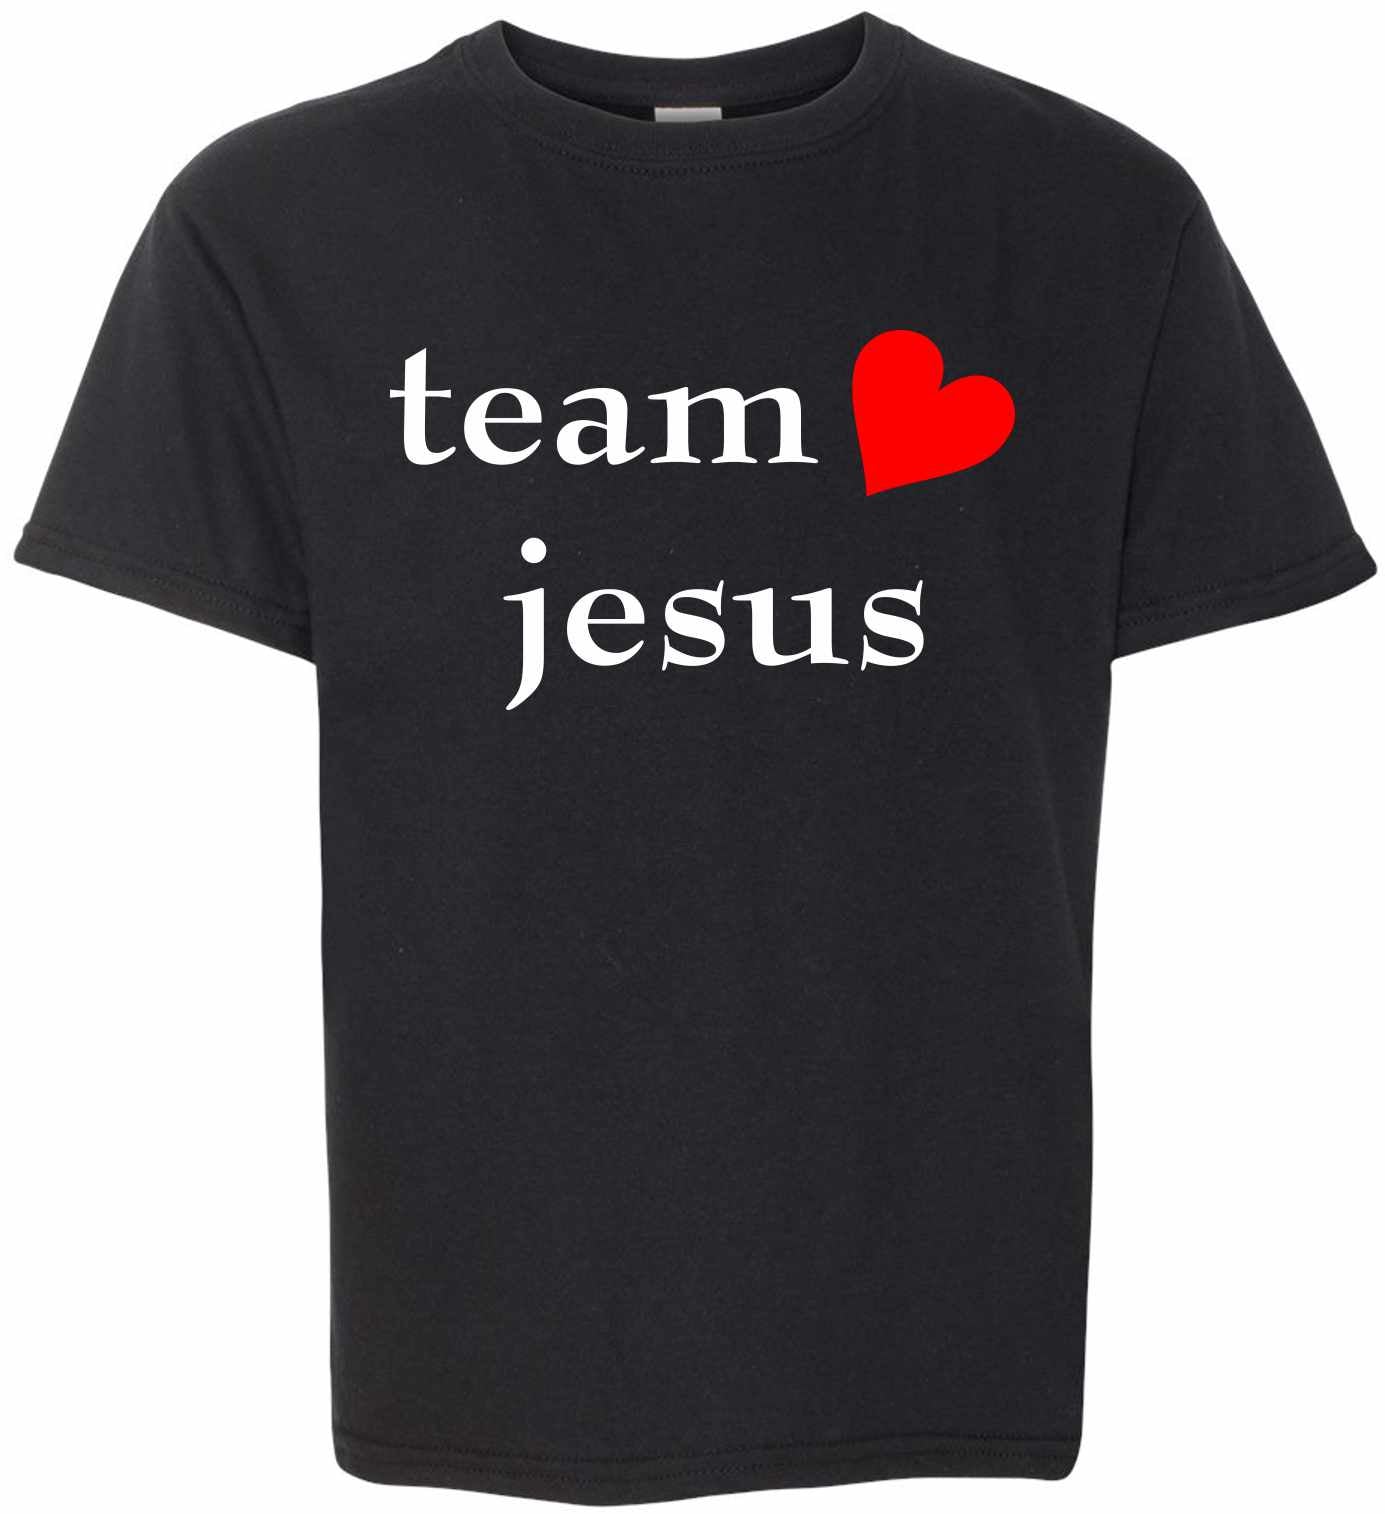 Team Jesus (heart) on Kids T-Shirt (#1163-201)